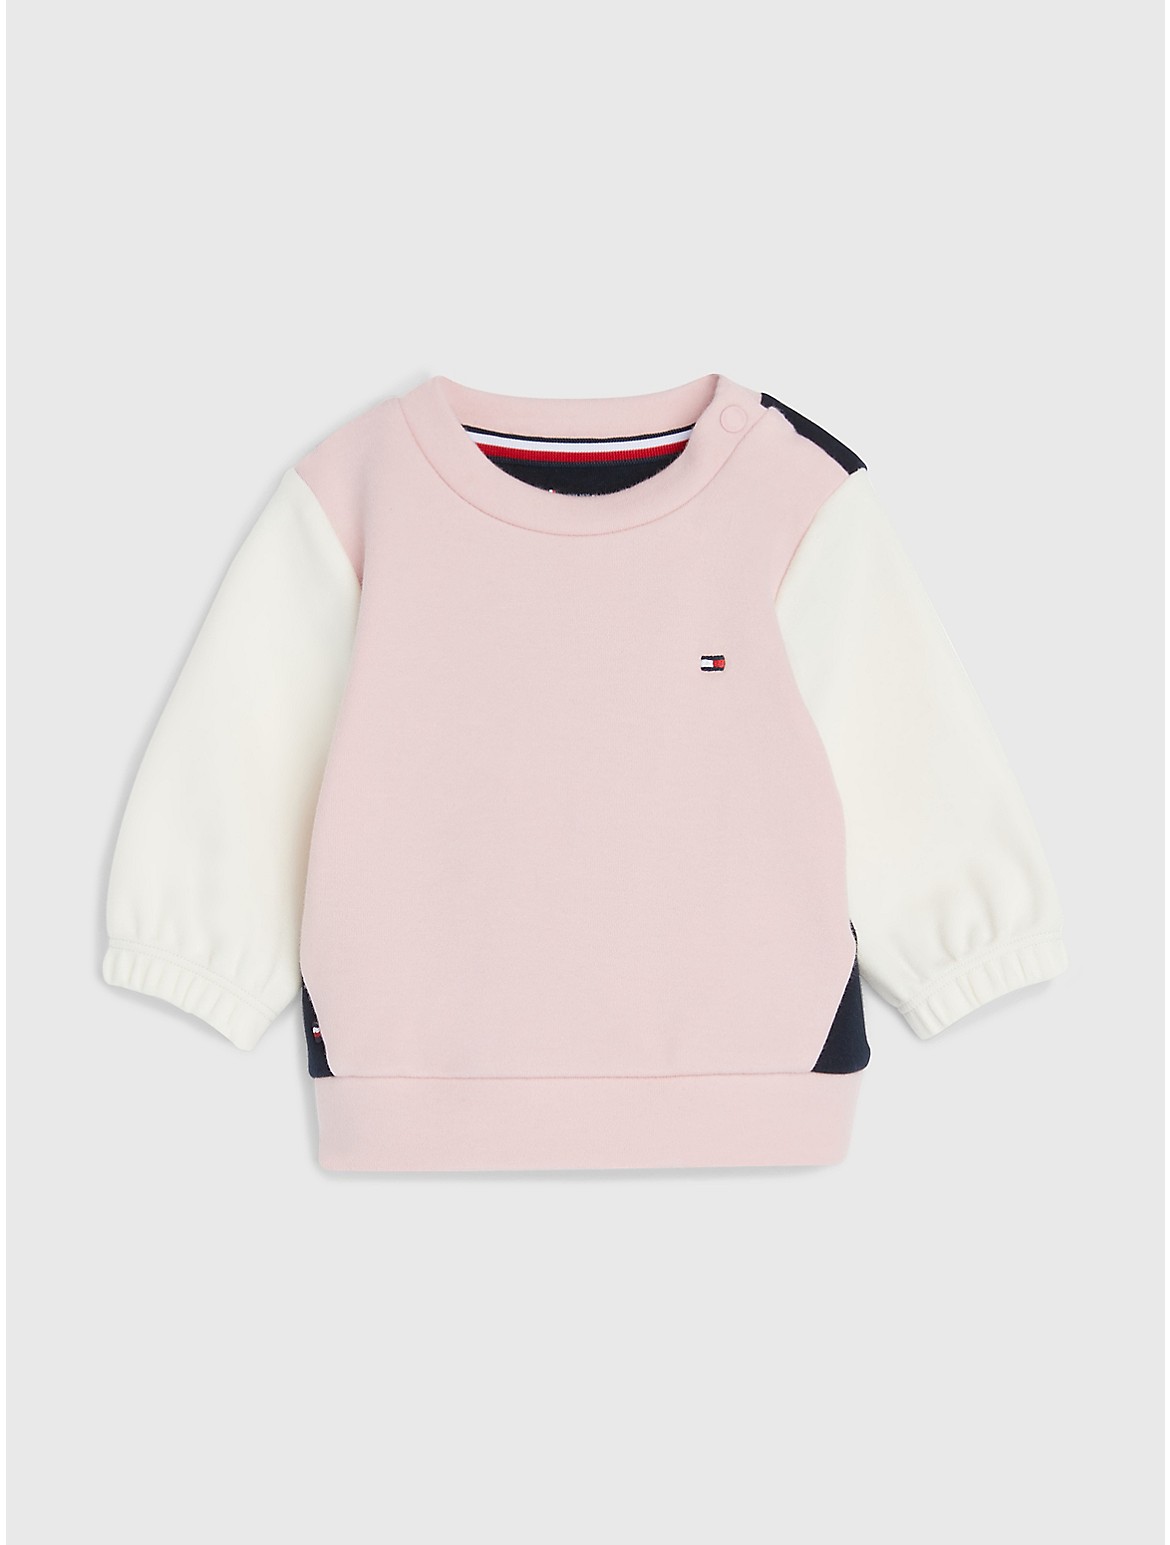 Tommy Hilfiger Babies' Colorblock Shirt & Pant Set - Pink - 0-3M